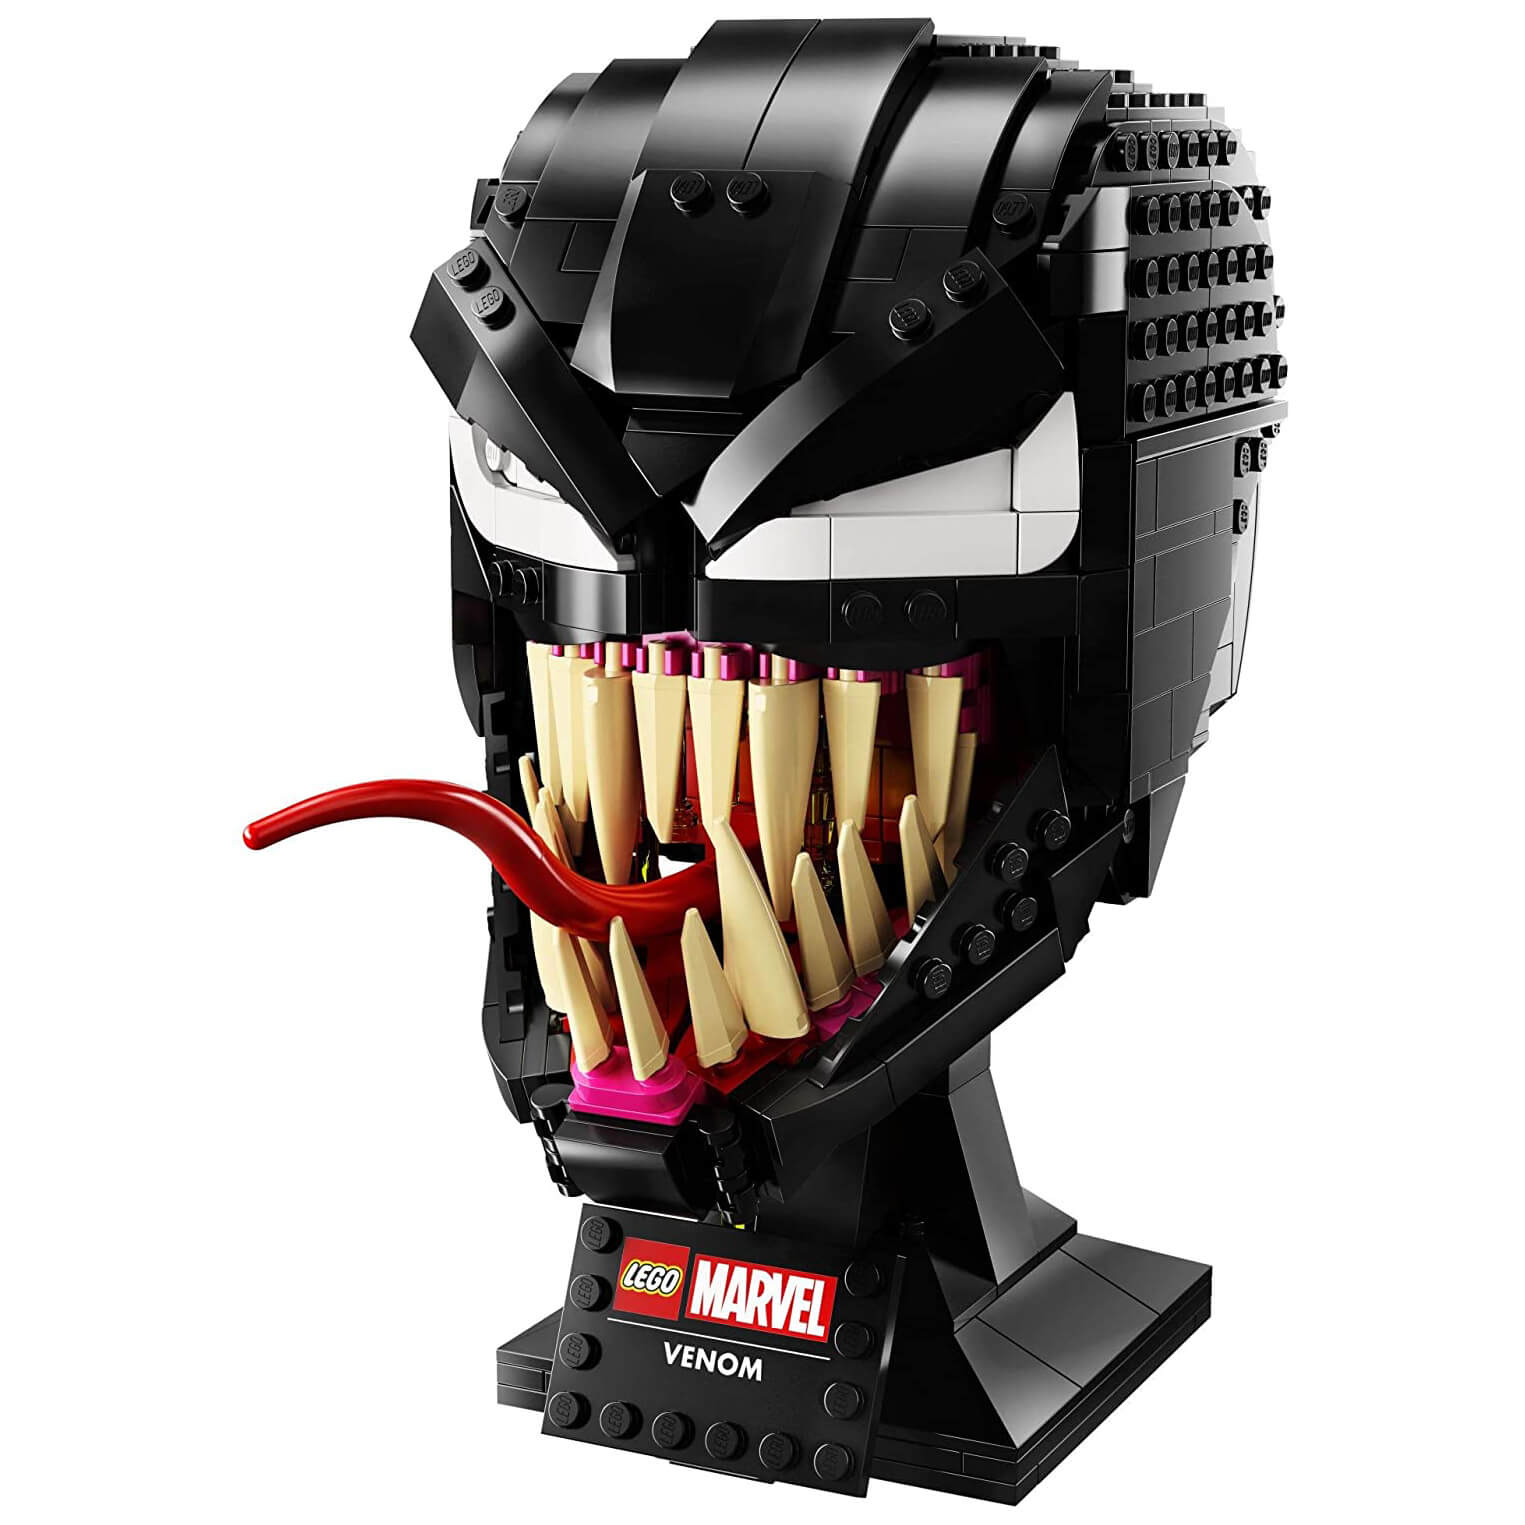 LEGO Super Heroes Marvel Venom 565 Piece Building Set (76187)